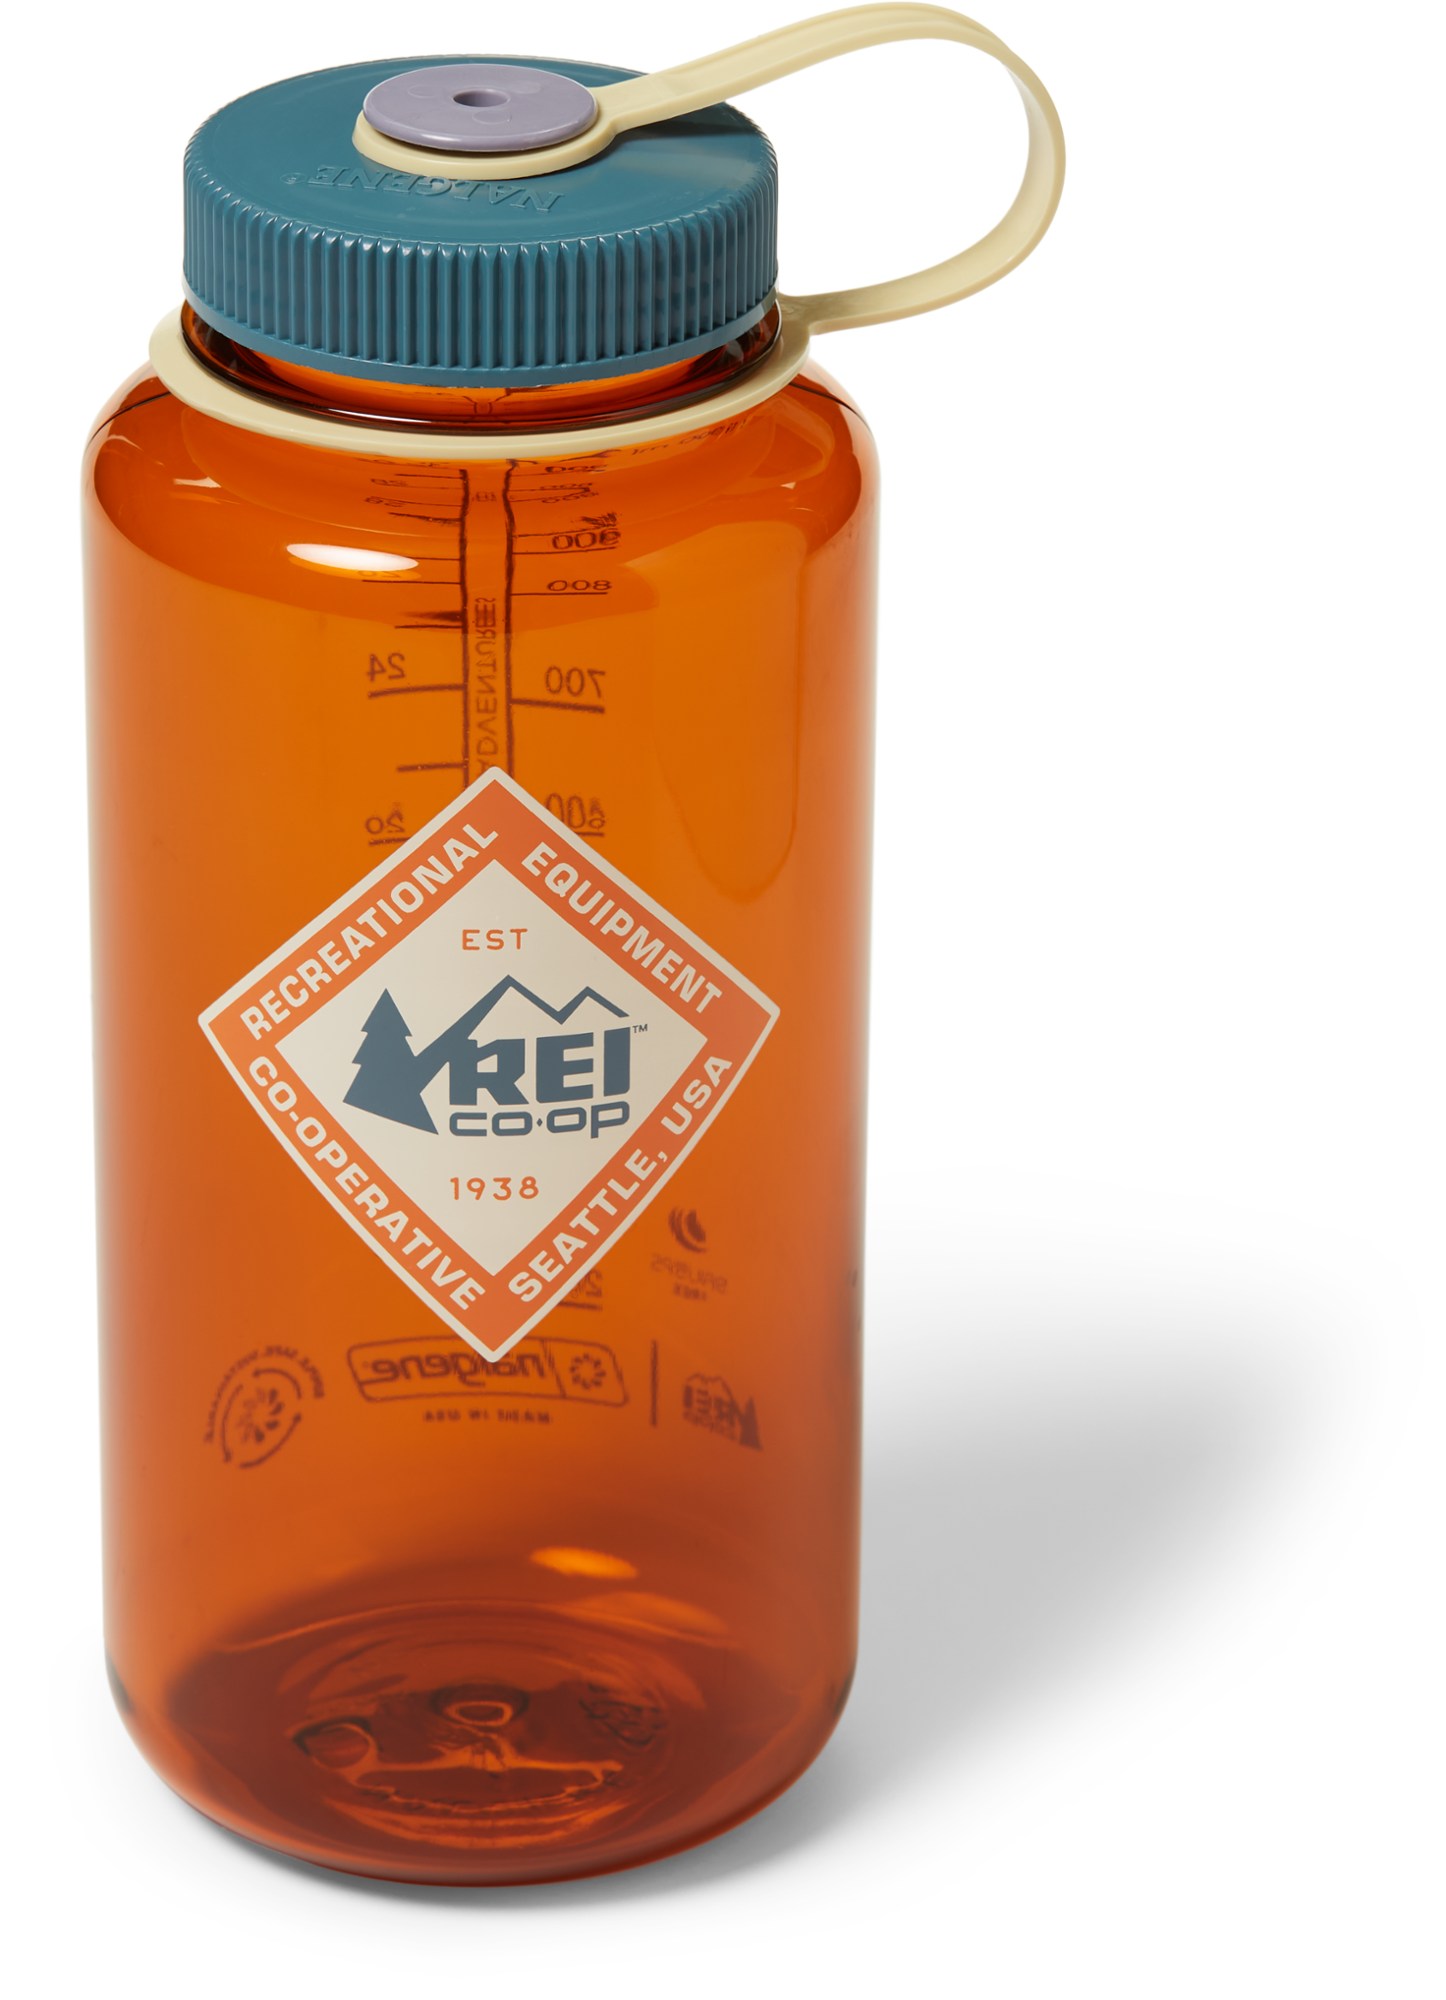 Бутылка для воды Nalgene Sustain Graphic с широким горлышком - 32 эт. унция REI Co-op, оранжевый